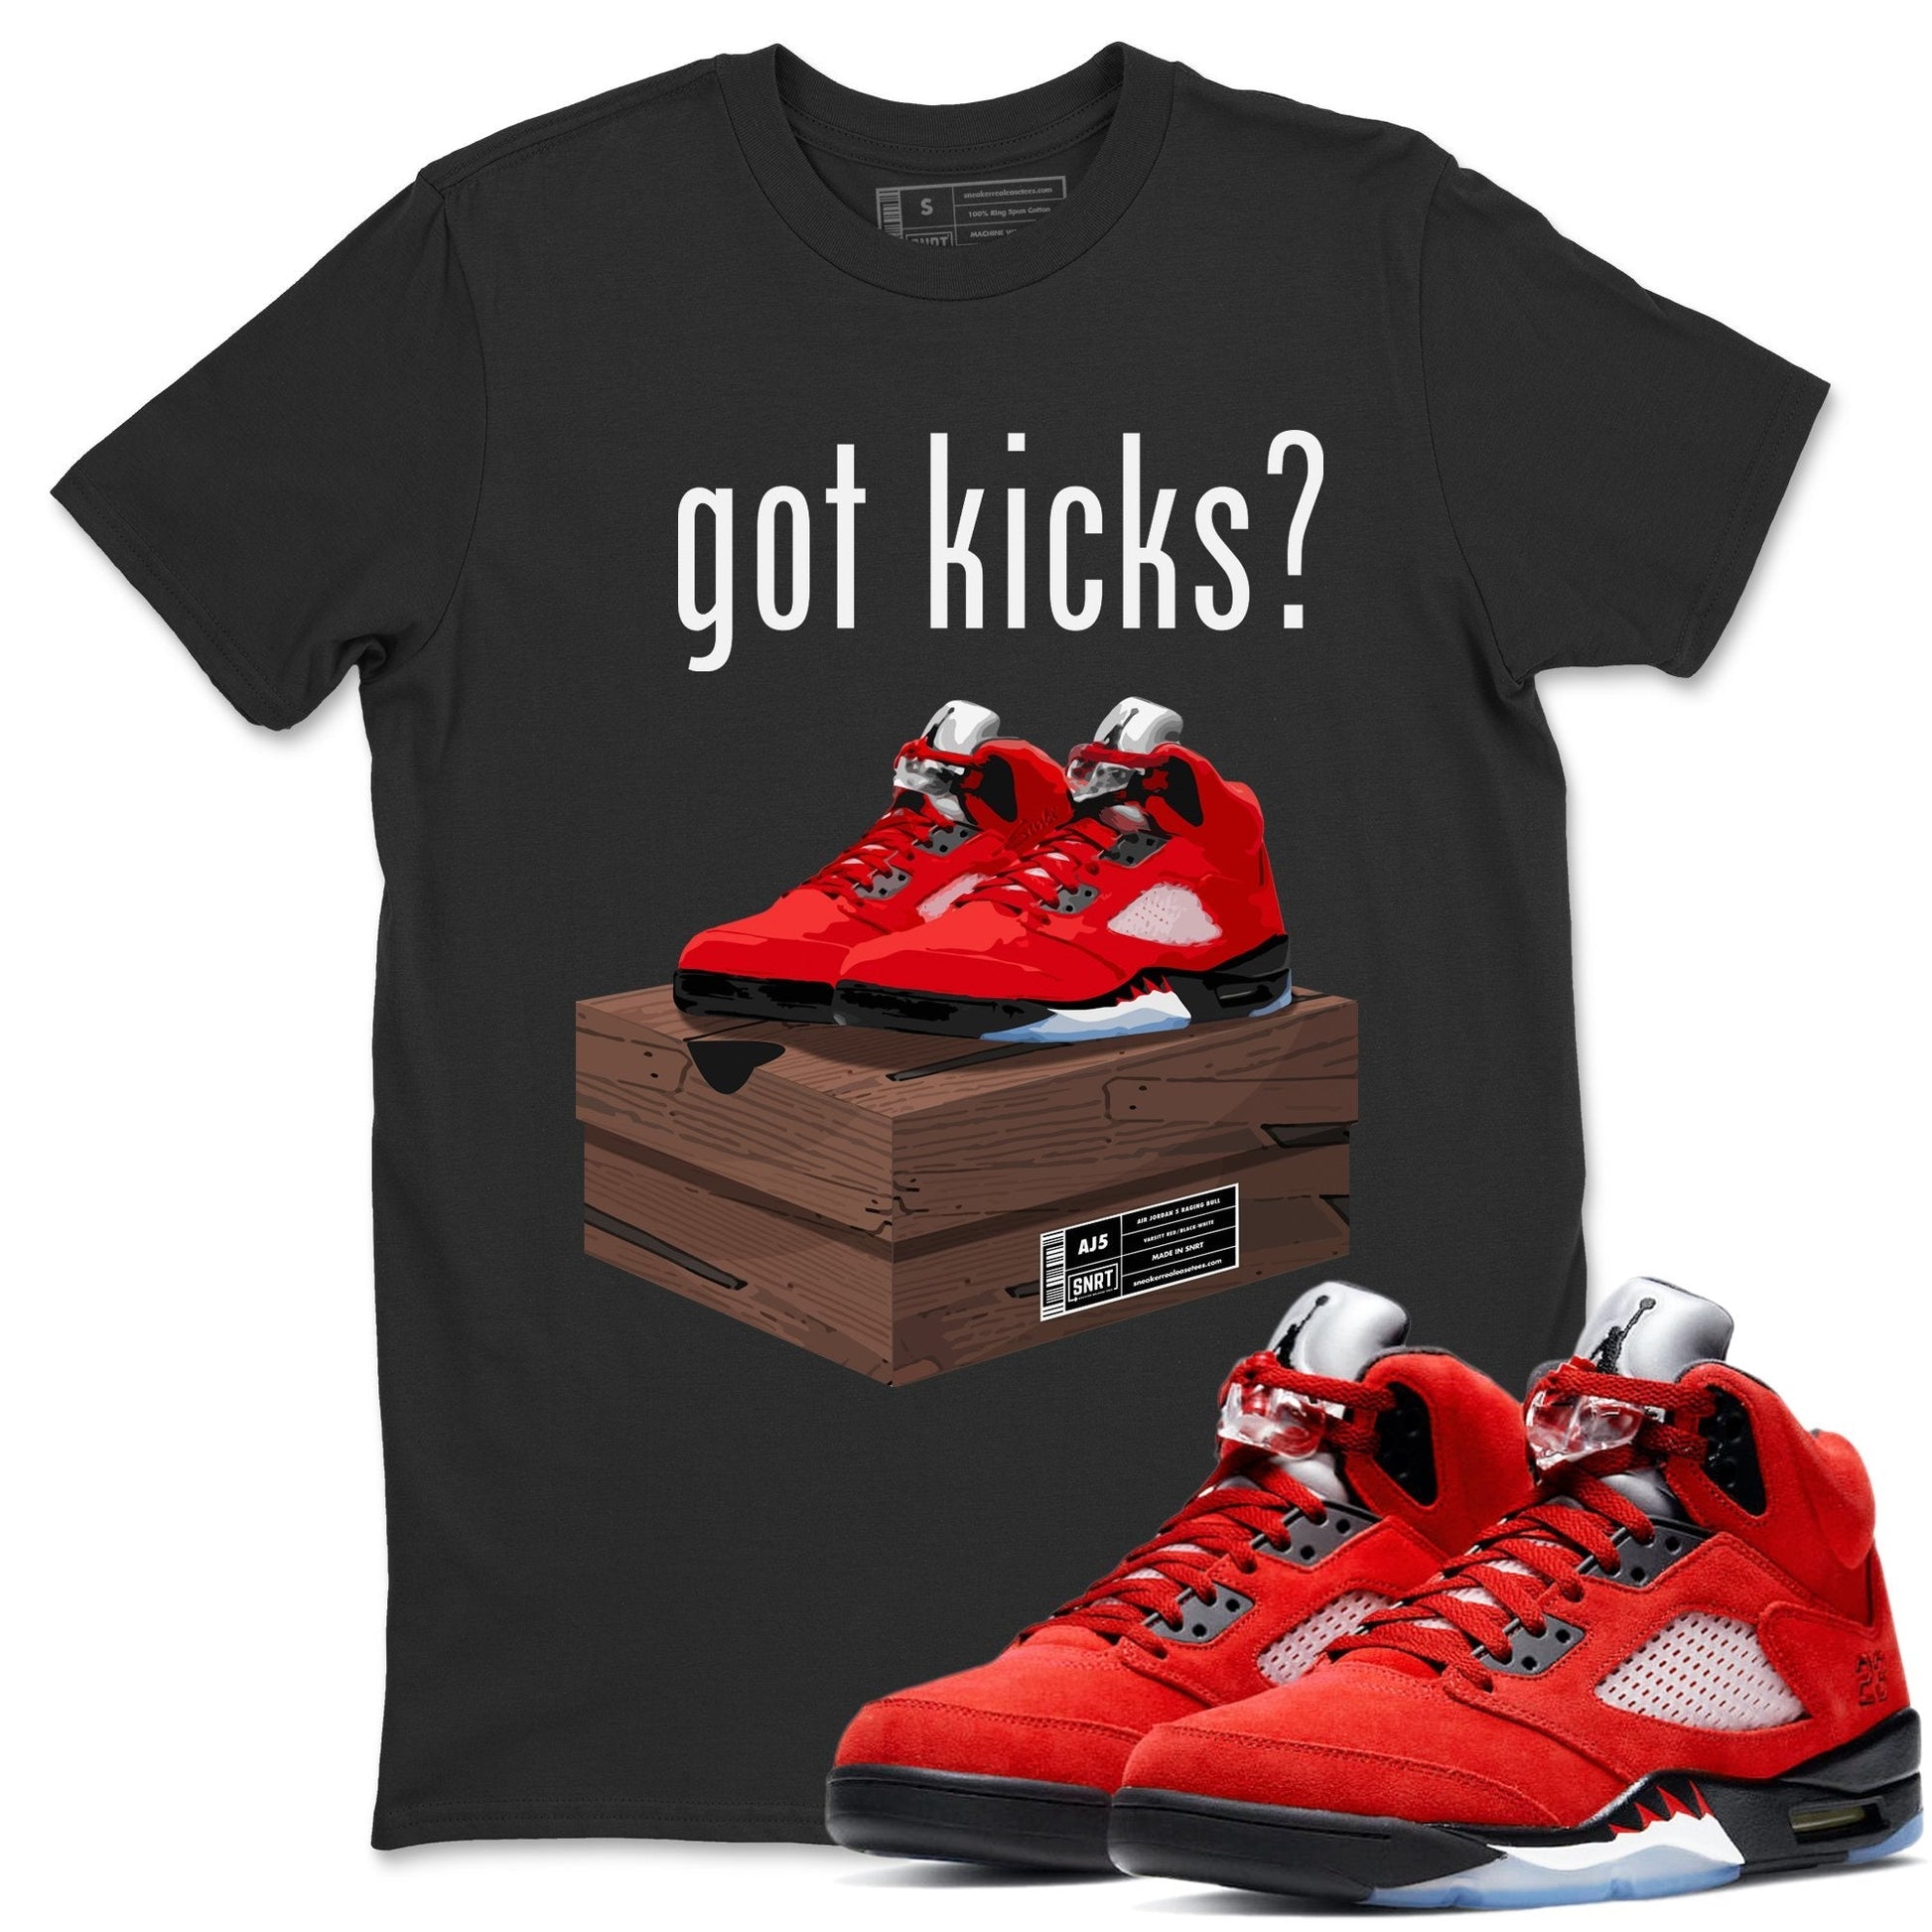 Jordan 5 Raging Bull Shirt To Match Jordans Got Kicks Sneaker Tees Jordan 5 Raging Bull Drip Gear Zone Sneaker Matching Clothing Unisex Shirts